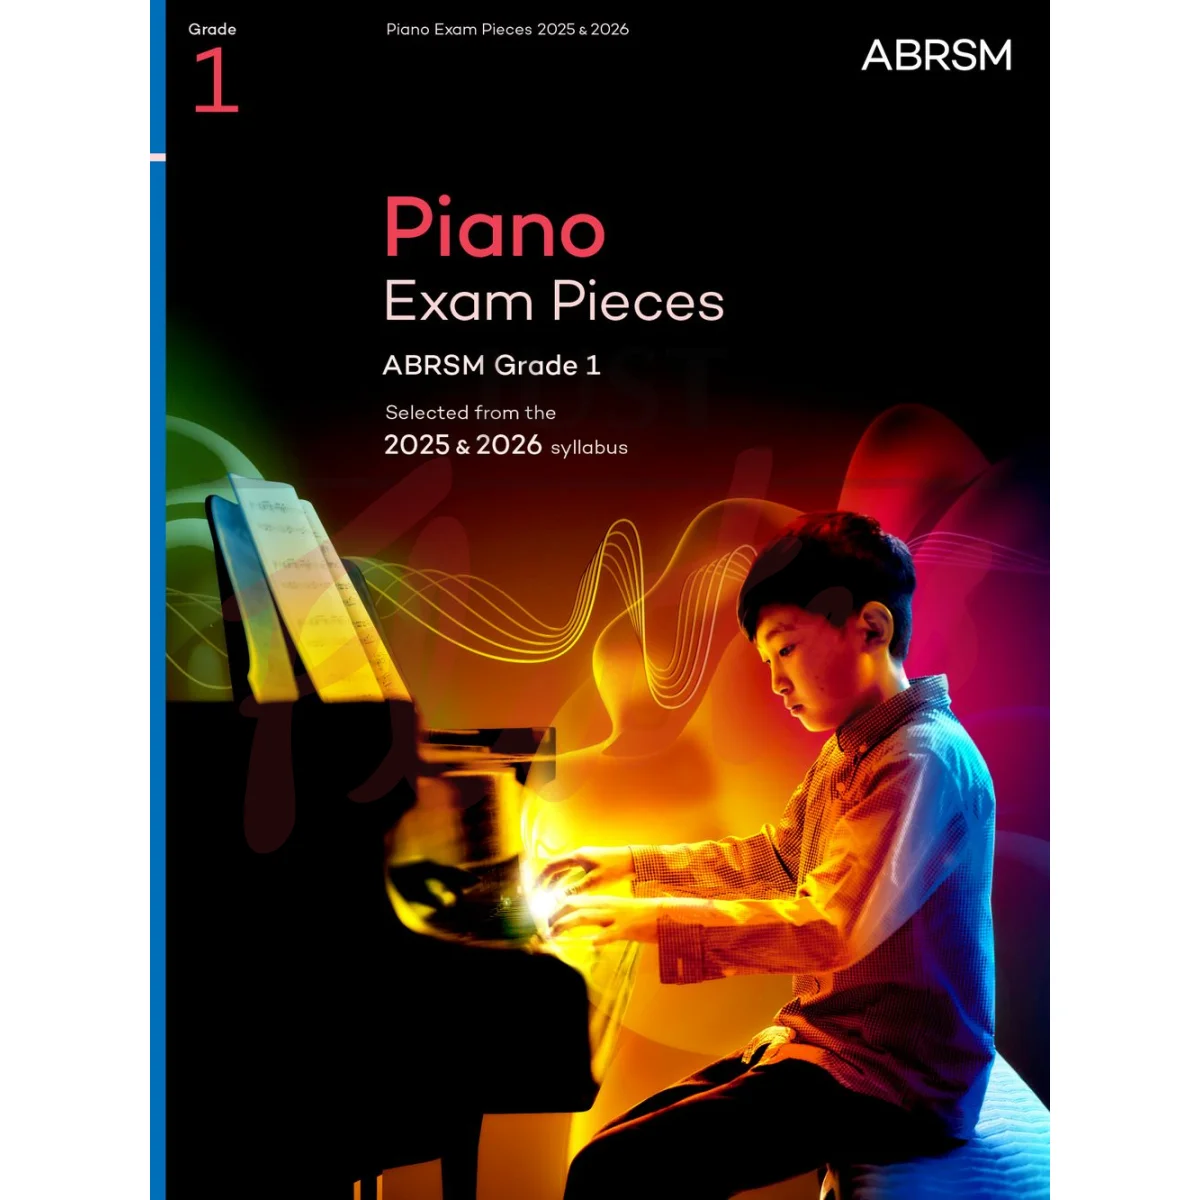 Piano Exam Pieces 2025-26, Grade 1